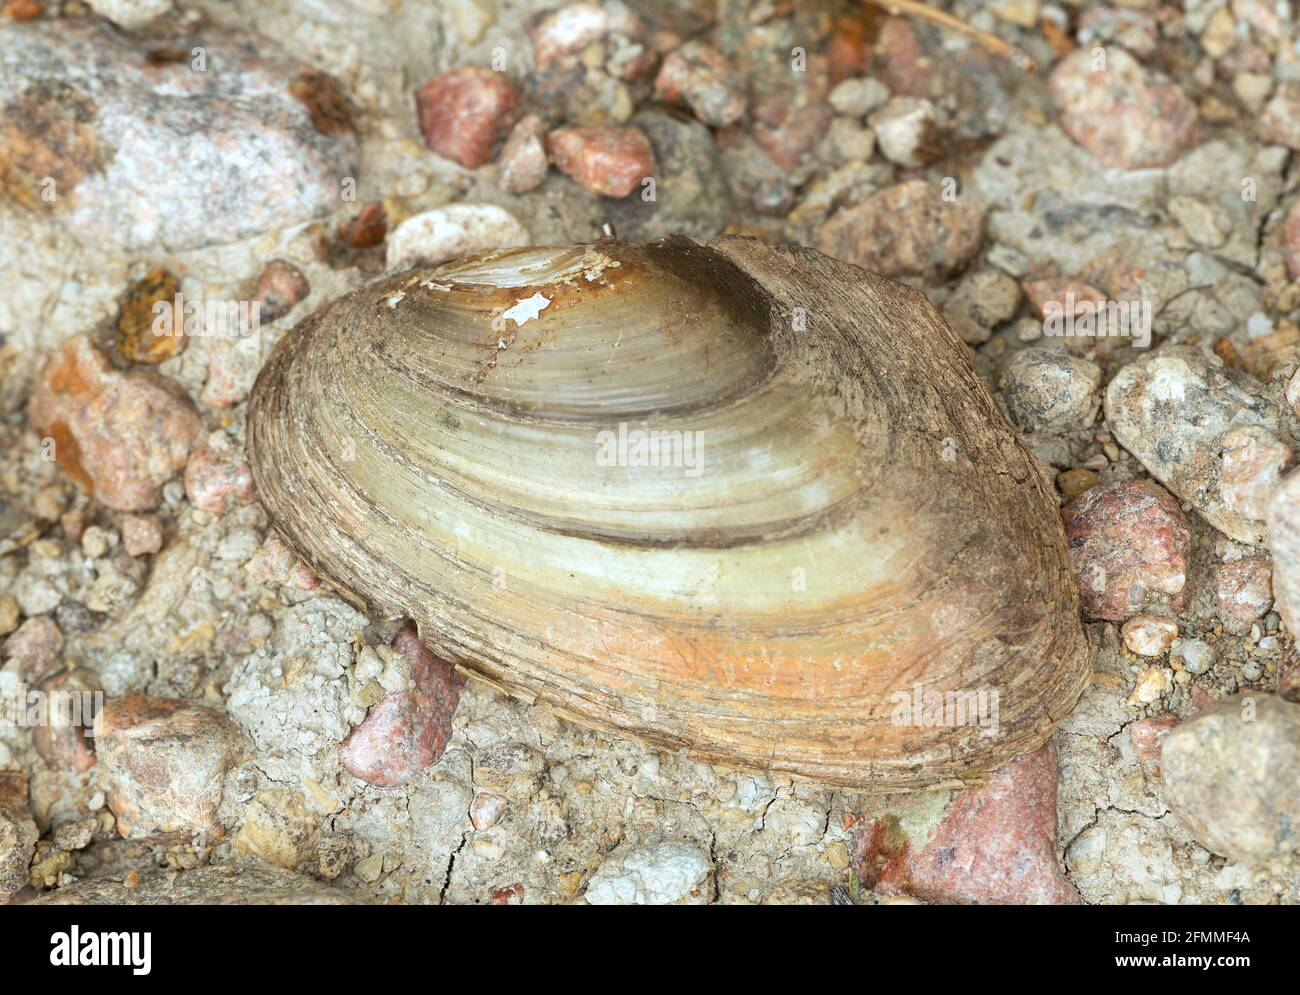 Shell of duck mussel, Anodonta anatina on rocks Stock Photo